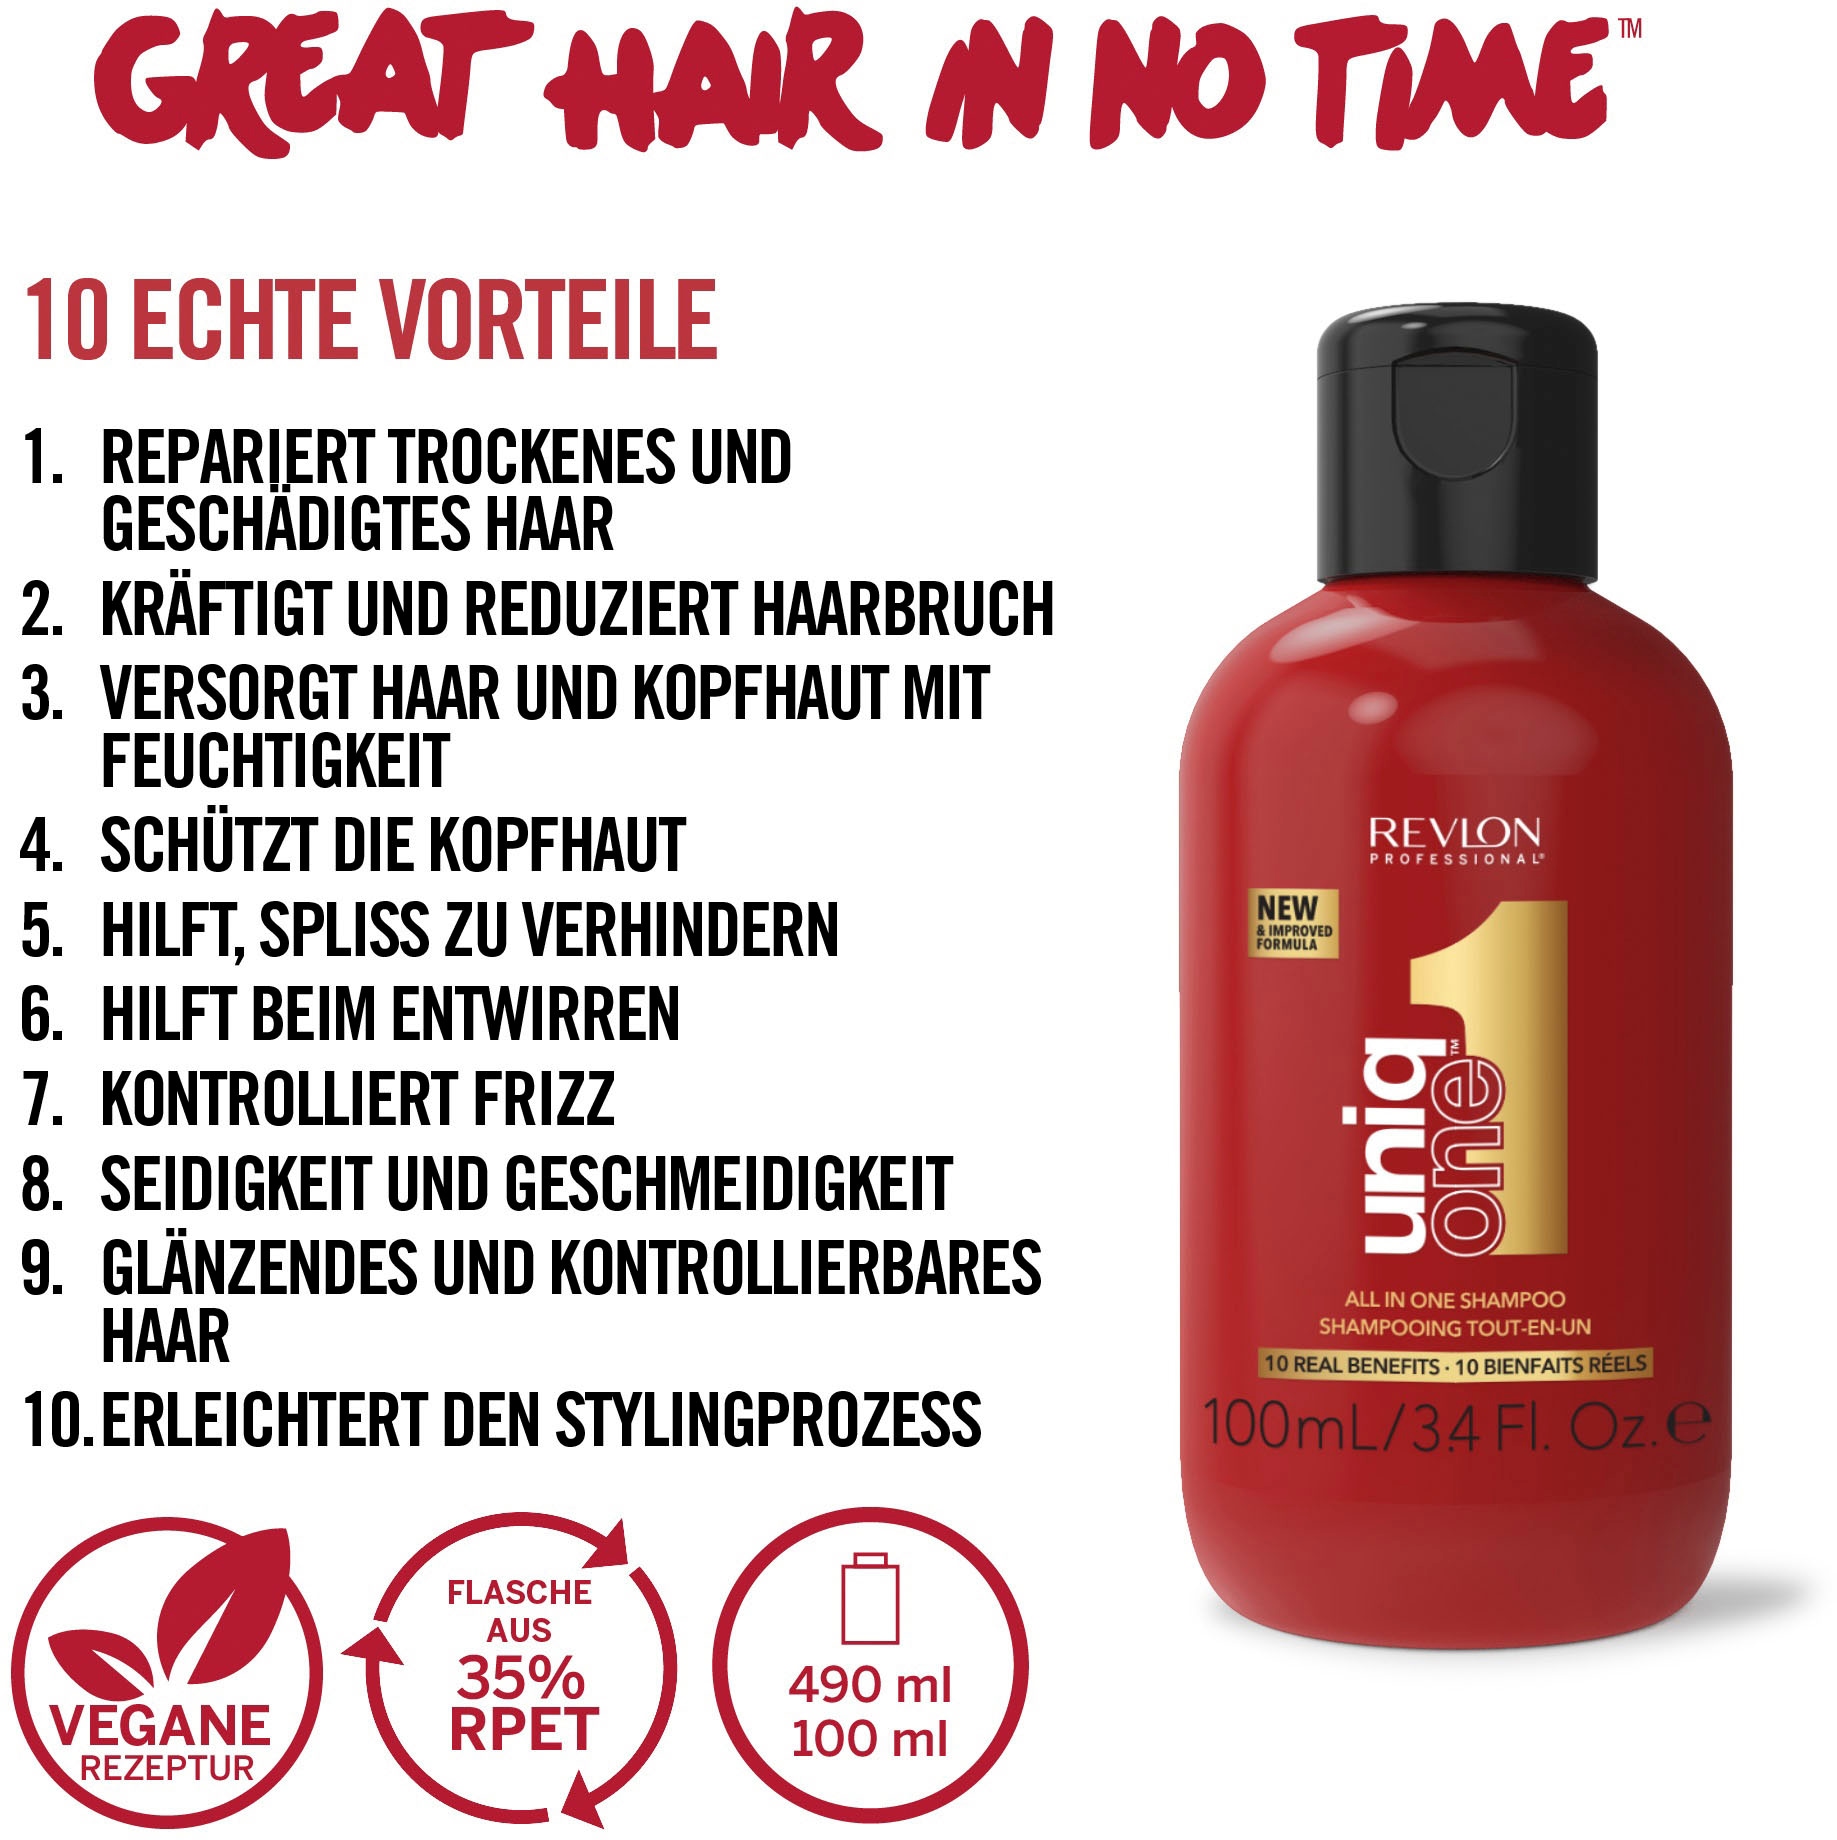 REVLON PROFESSIONAL Haarpflege-Set »Uniqone 250 Great ml« Set All In OTTO Hair Shop Online im One Care